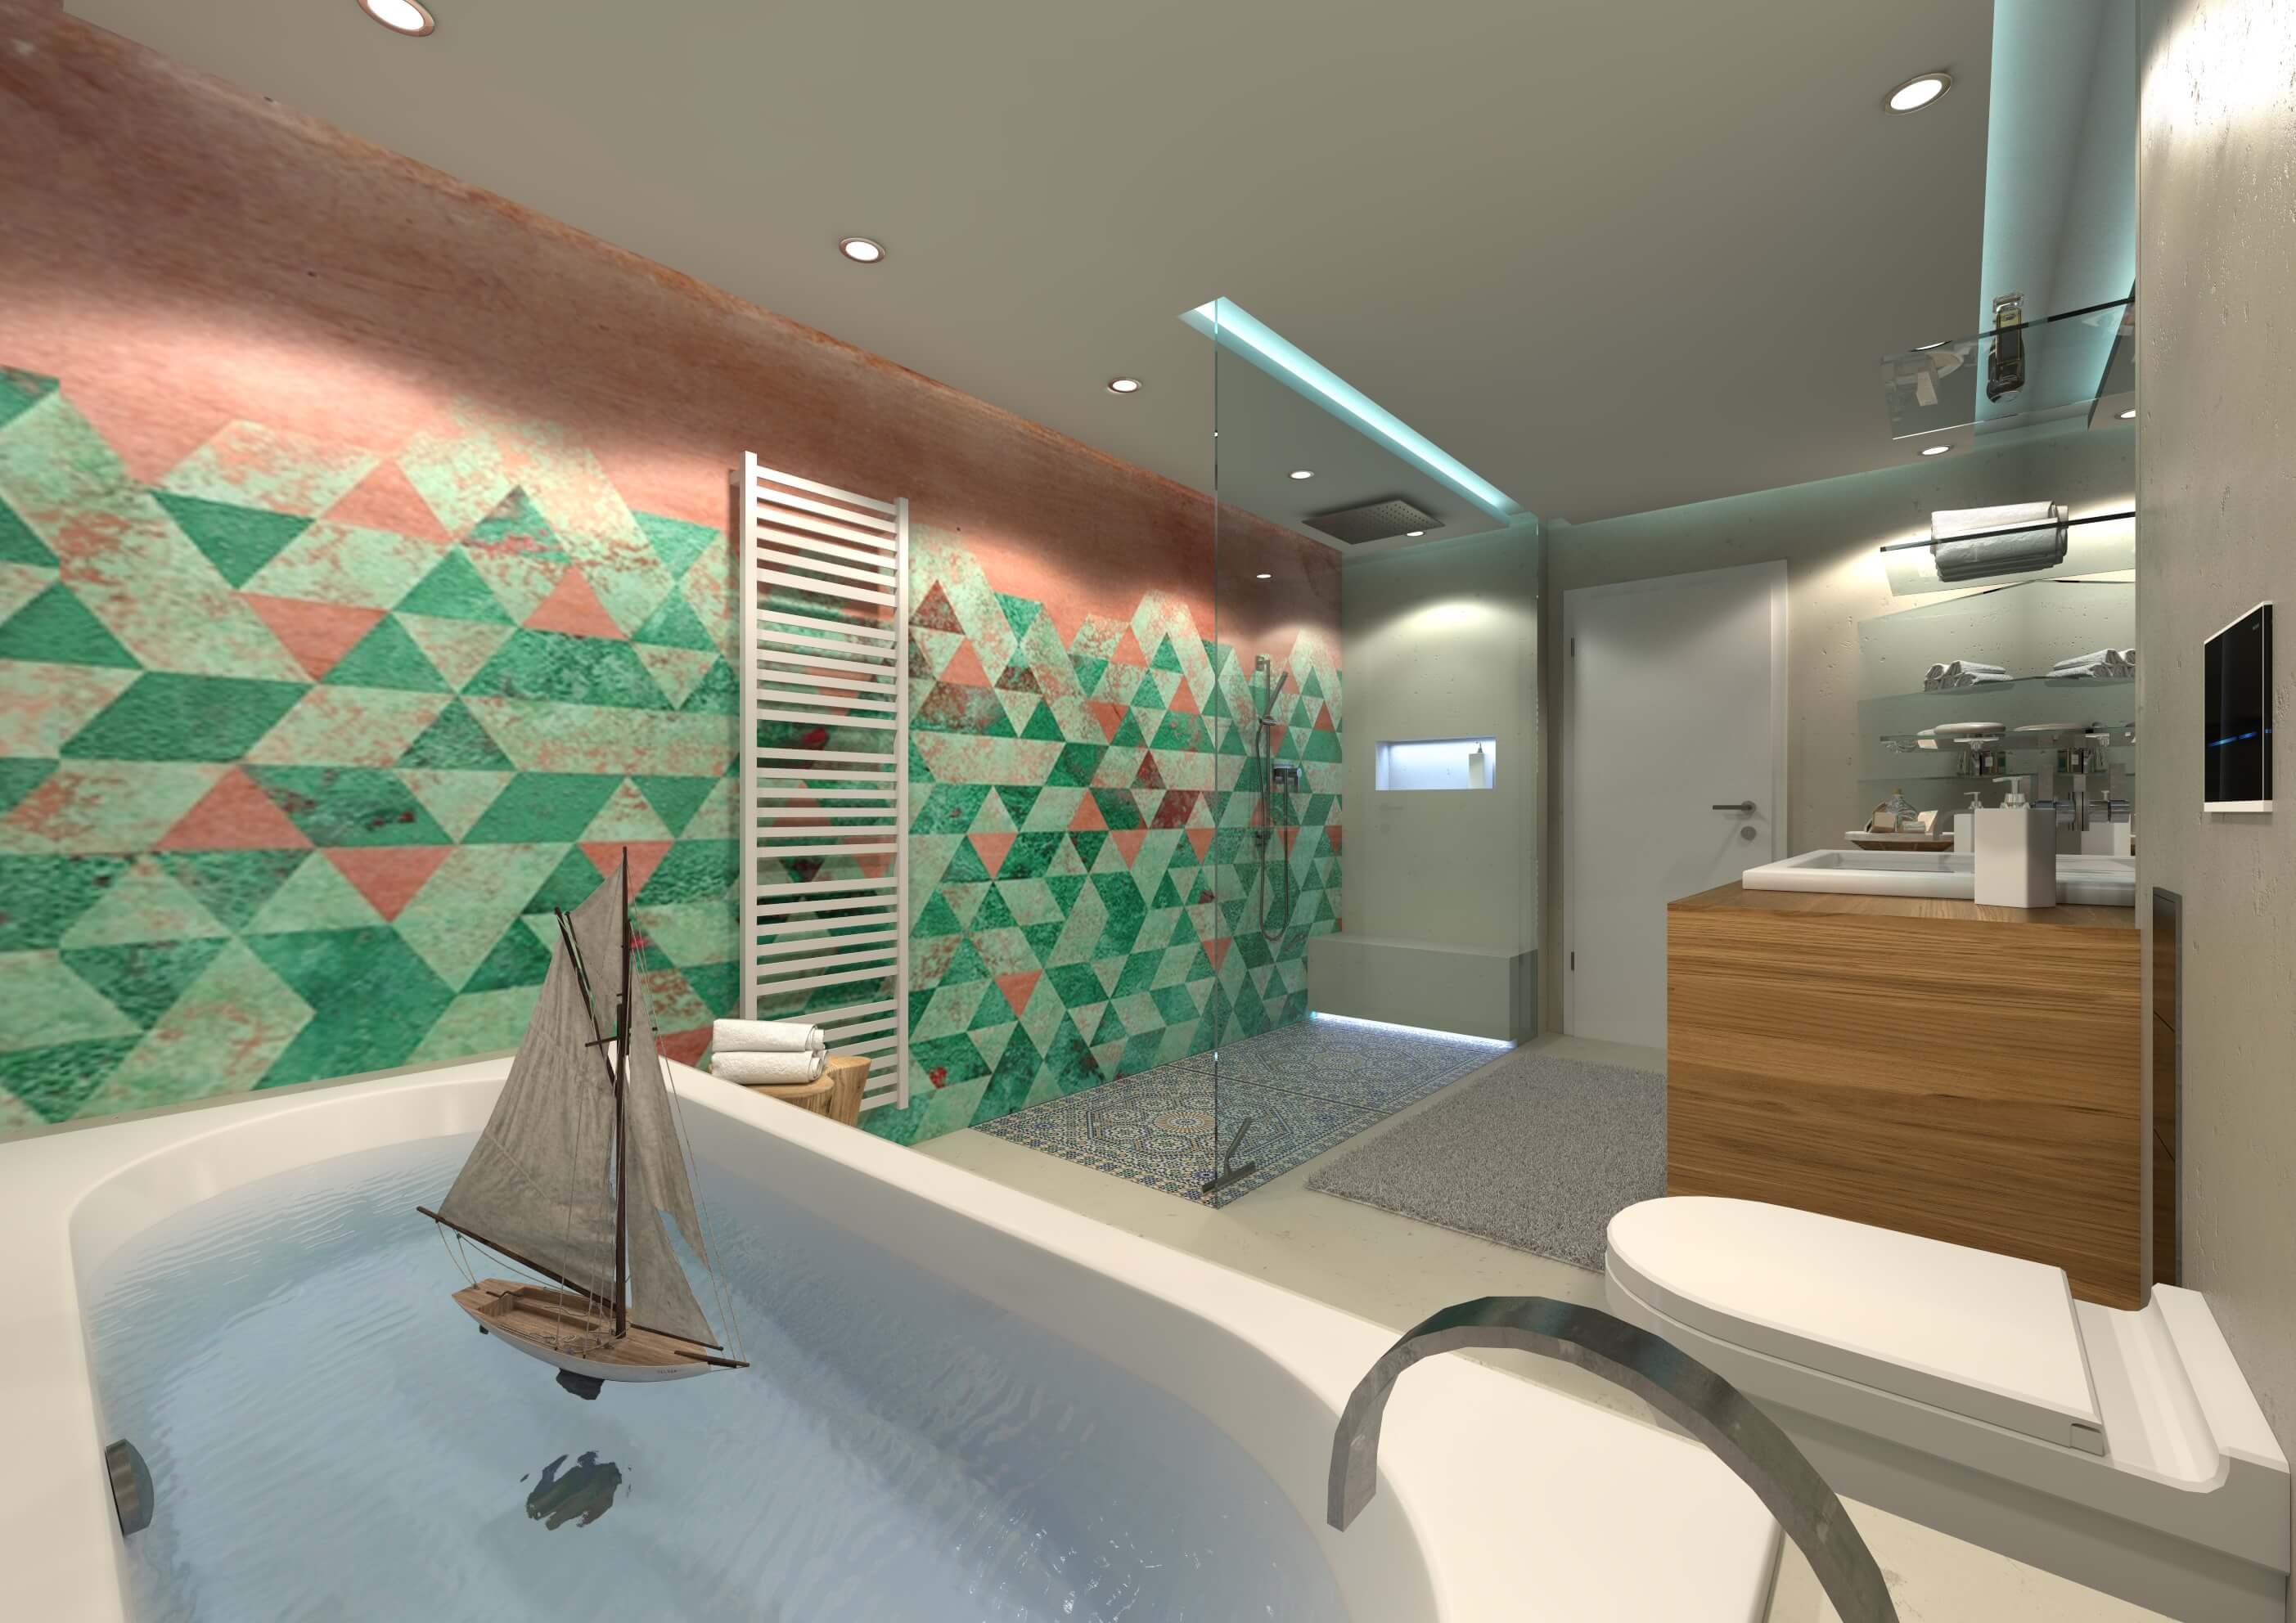 Duschbereich mit wasserfester Wall and Deco Tapete